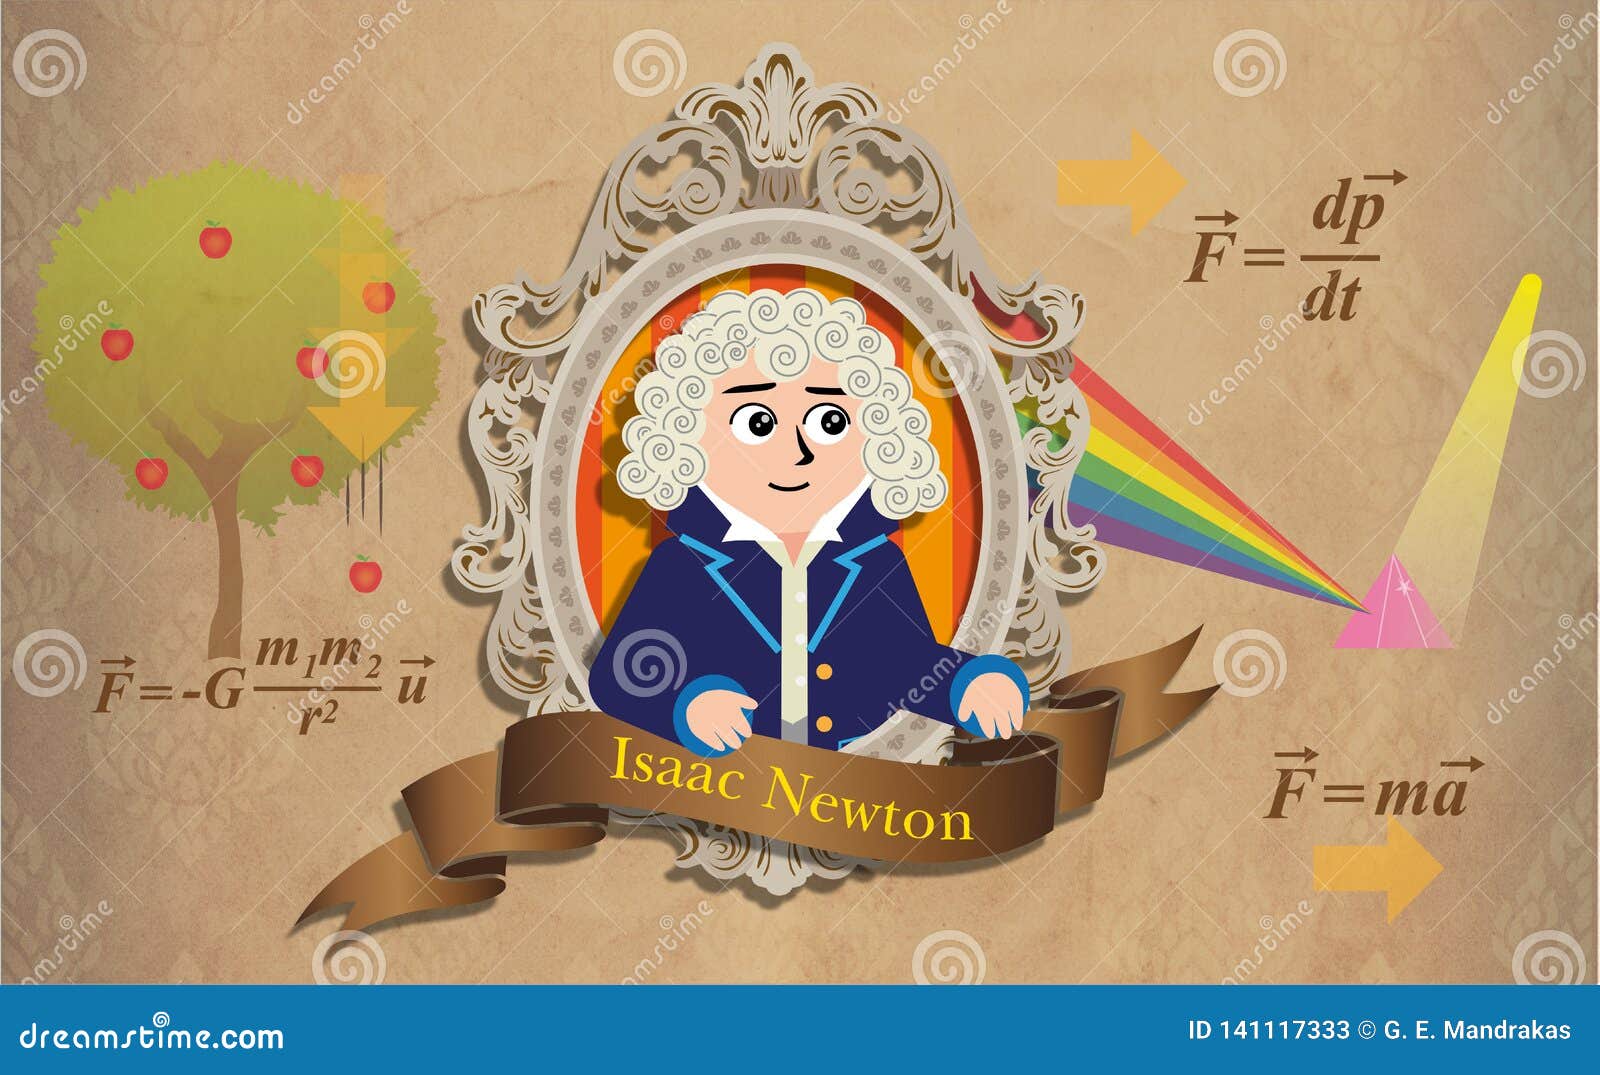 isaac newton mathematician, astronomer, natural philosopher, alchemist, and theologian.